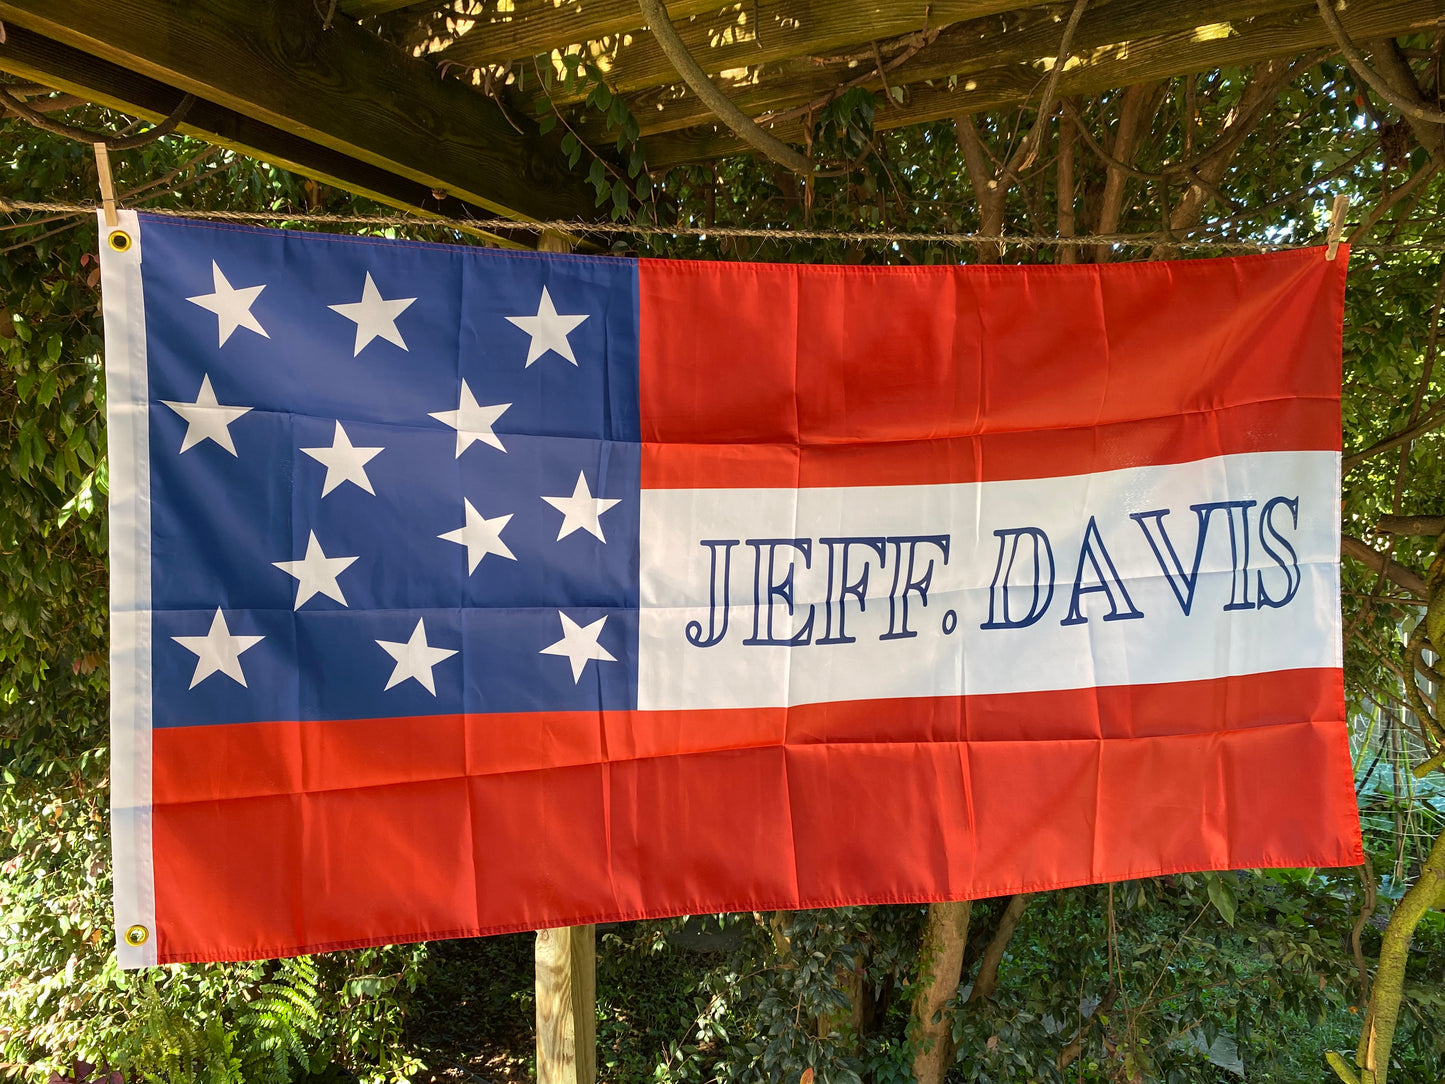 Elkhorn Tavern "Jeff. Davis" First National House Flag